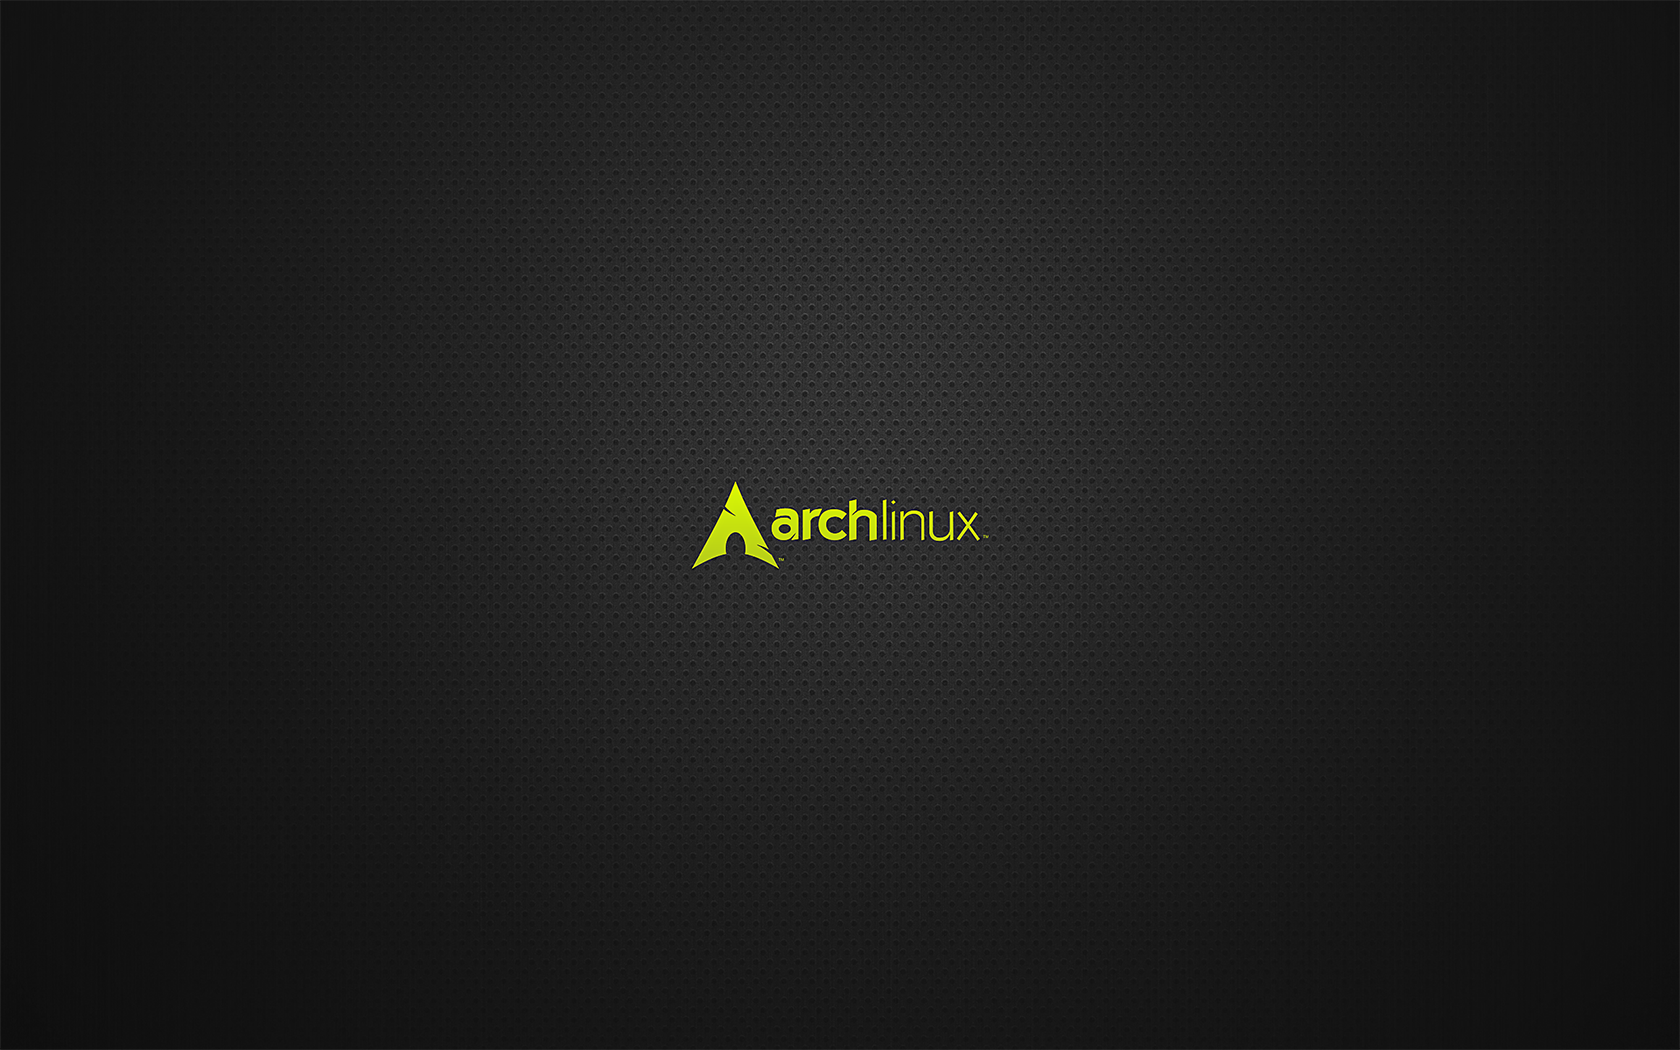 Arch Linux Wallpaper - Toronto by Dethredic on DeviantArt